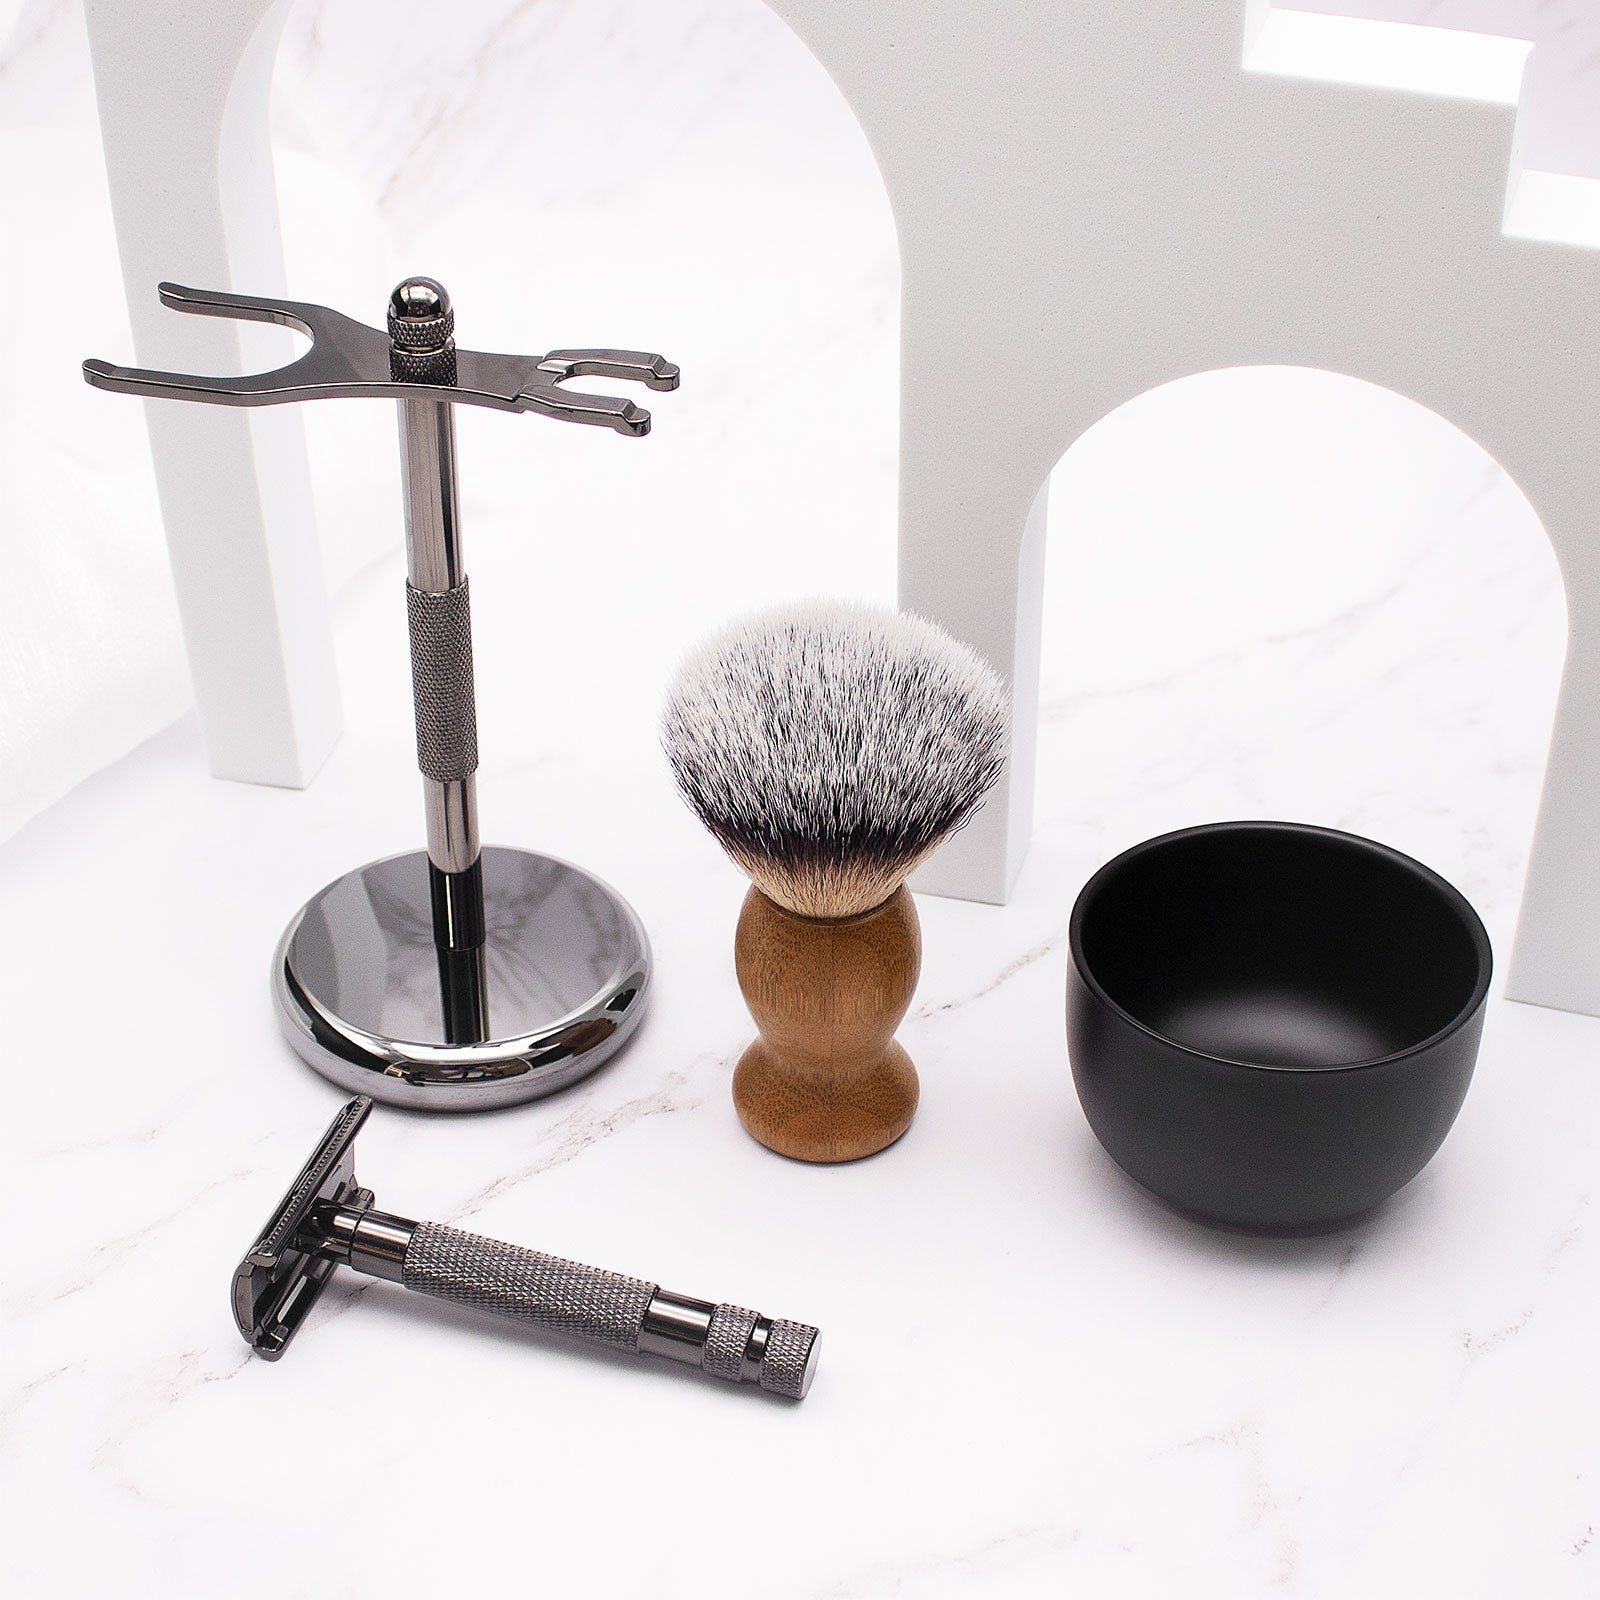 Great Gentleman Shaving Set Kit with Shaving brush, Stand, Safety Razor and Shaving Bowl